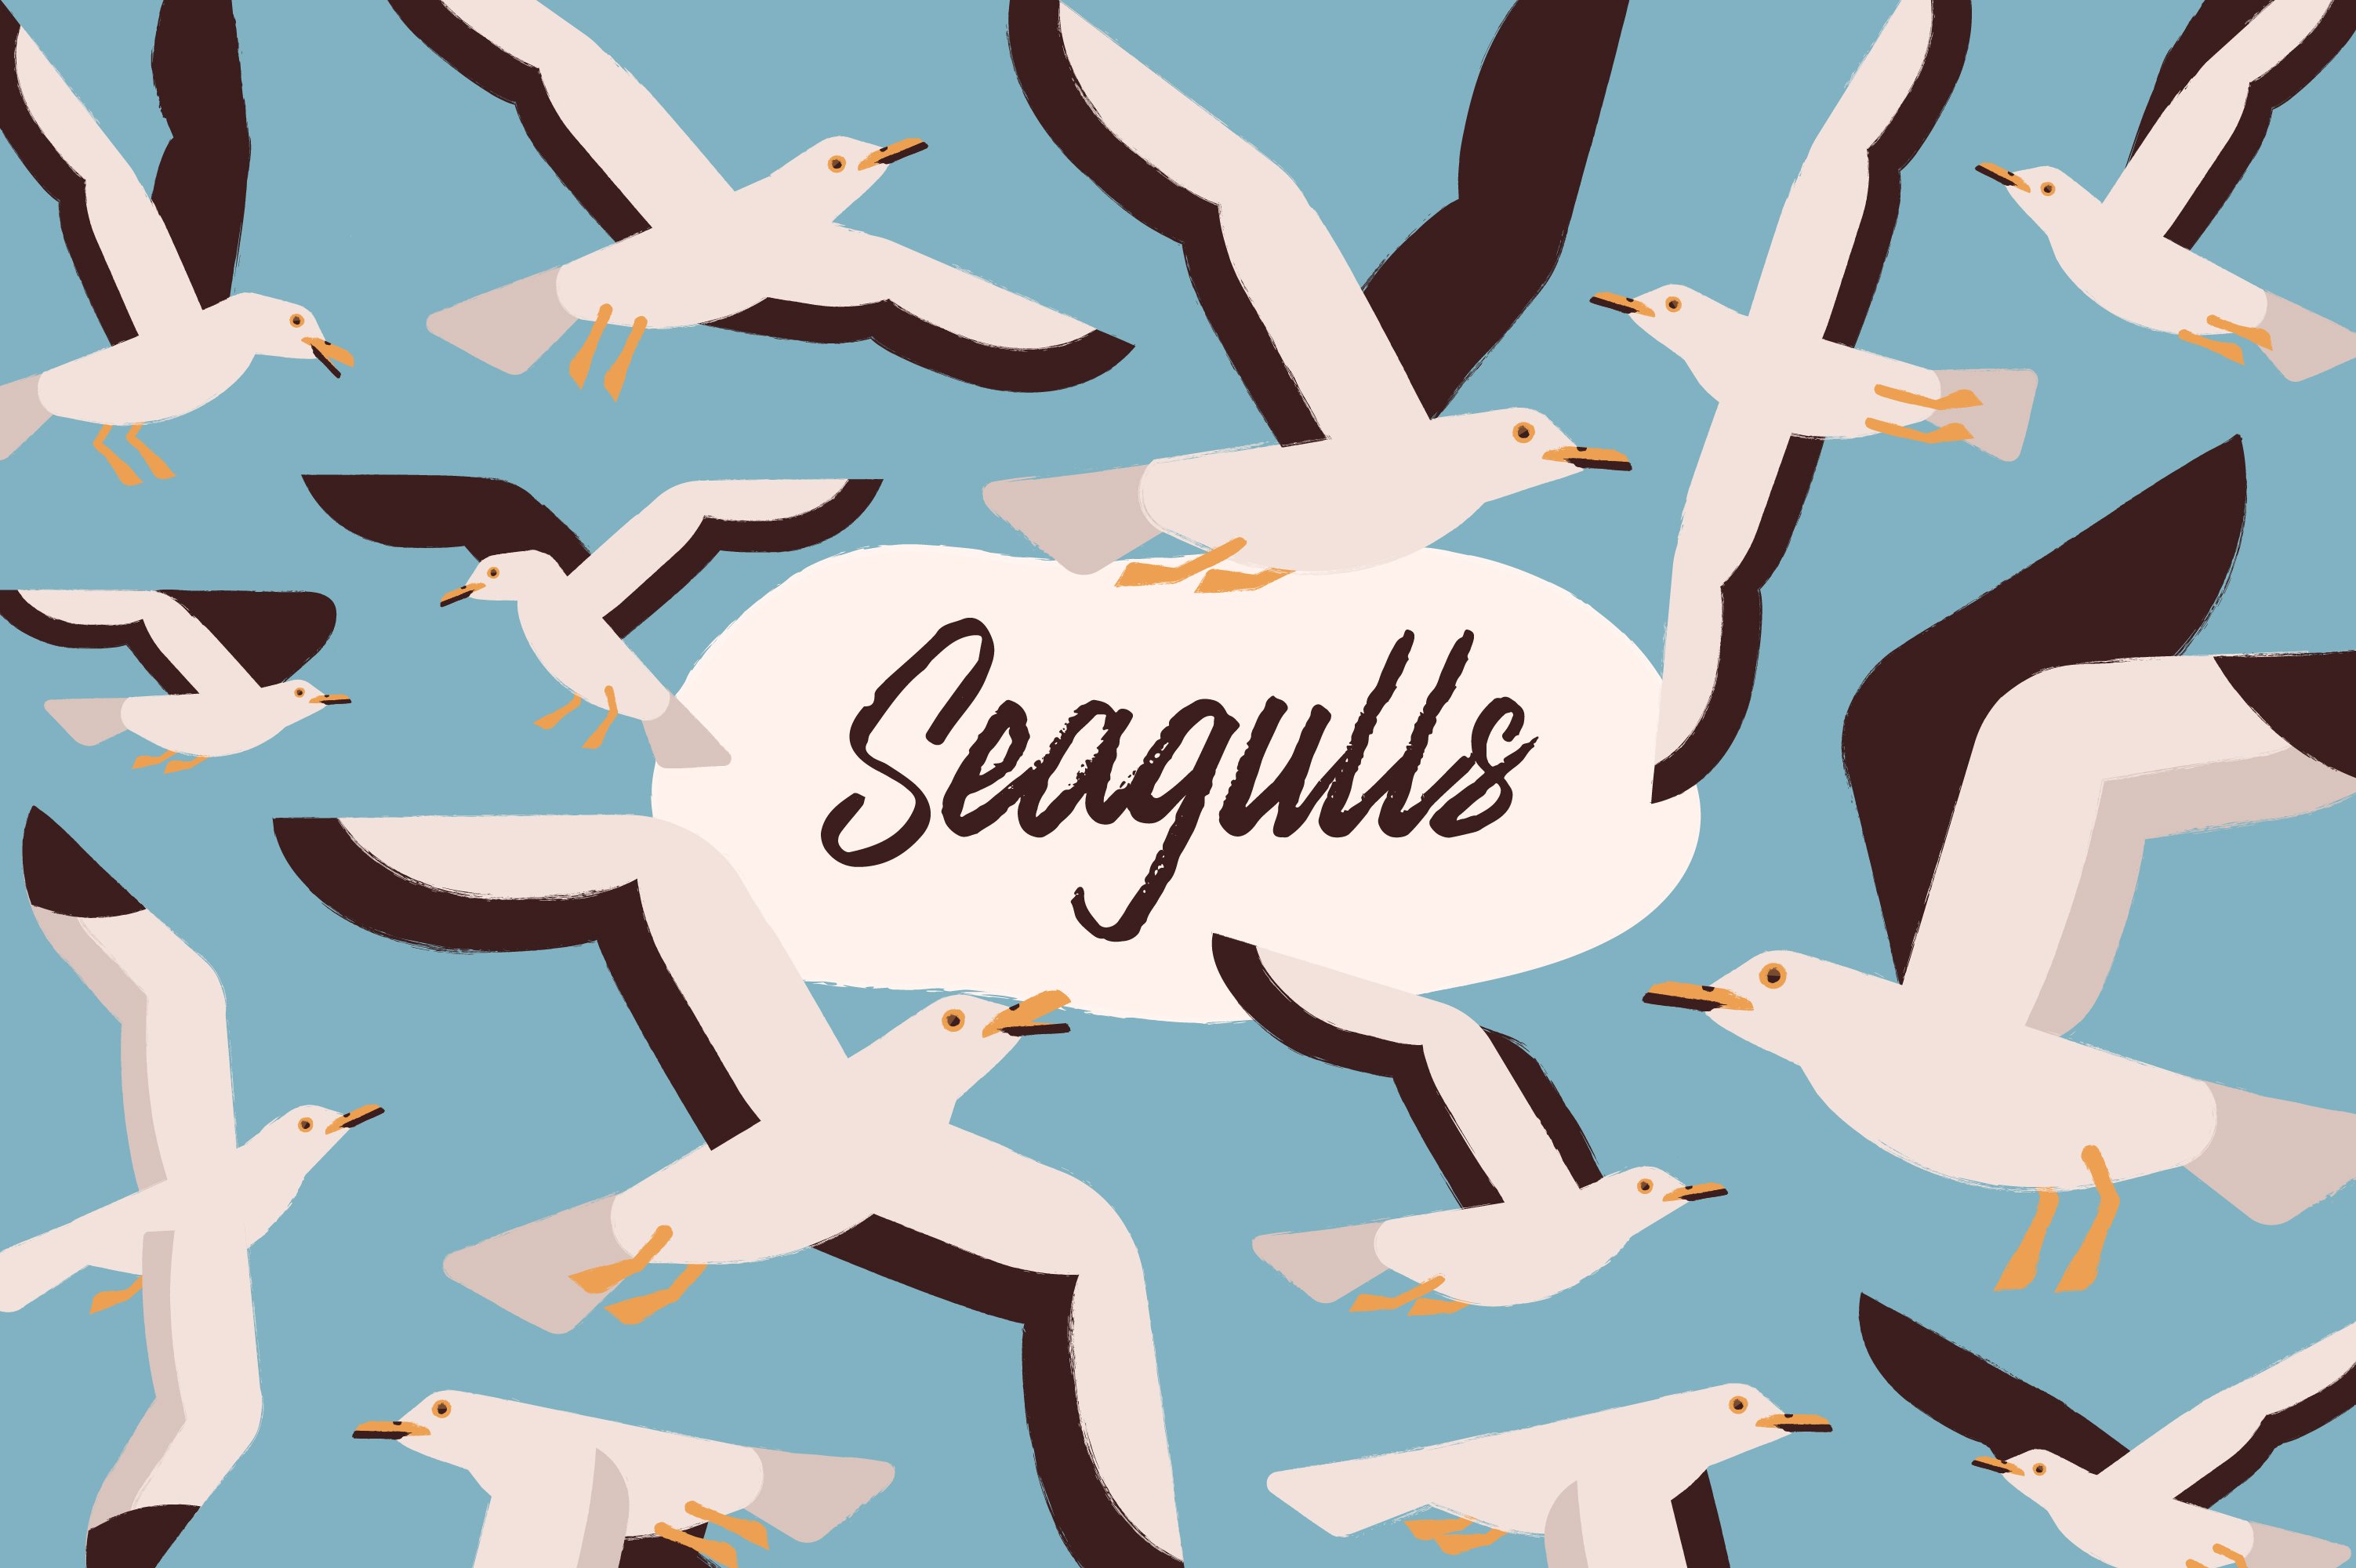 Seagulls set cover image.